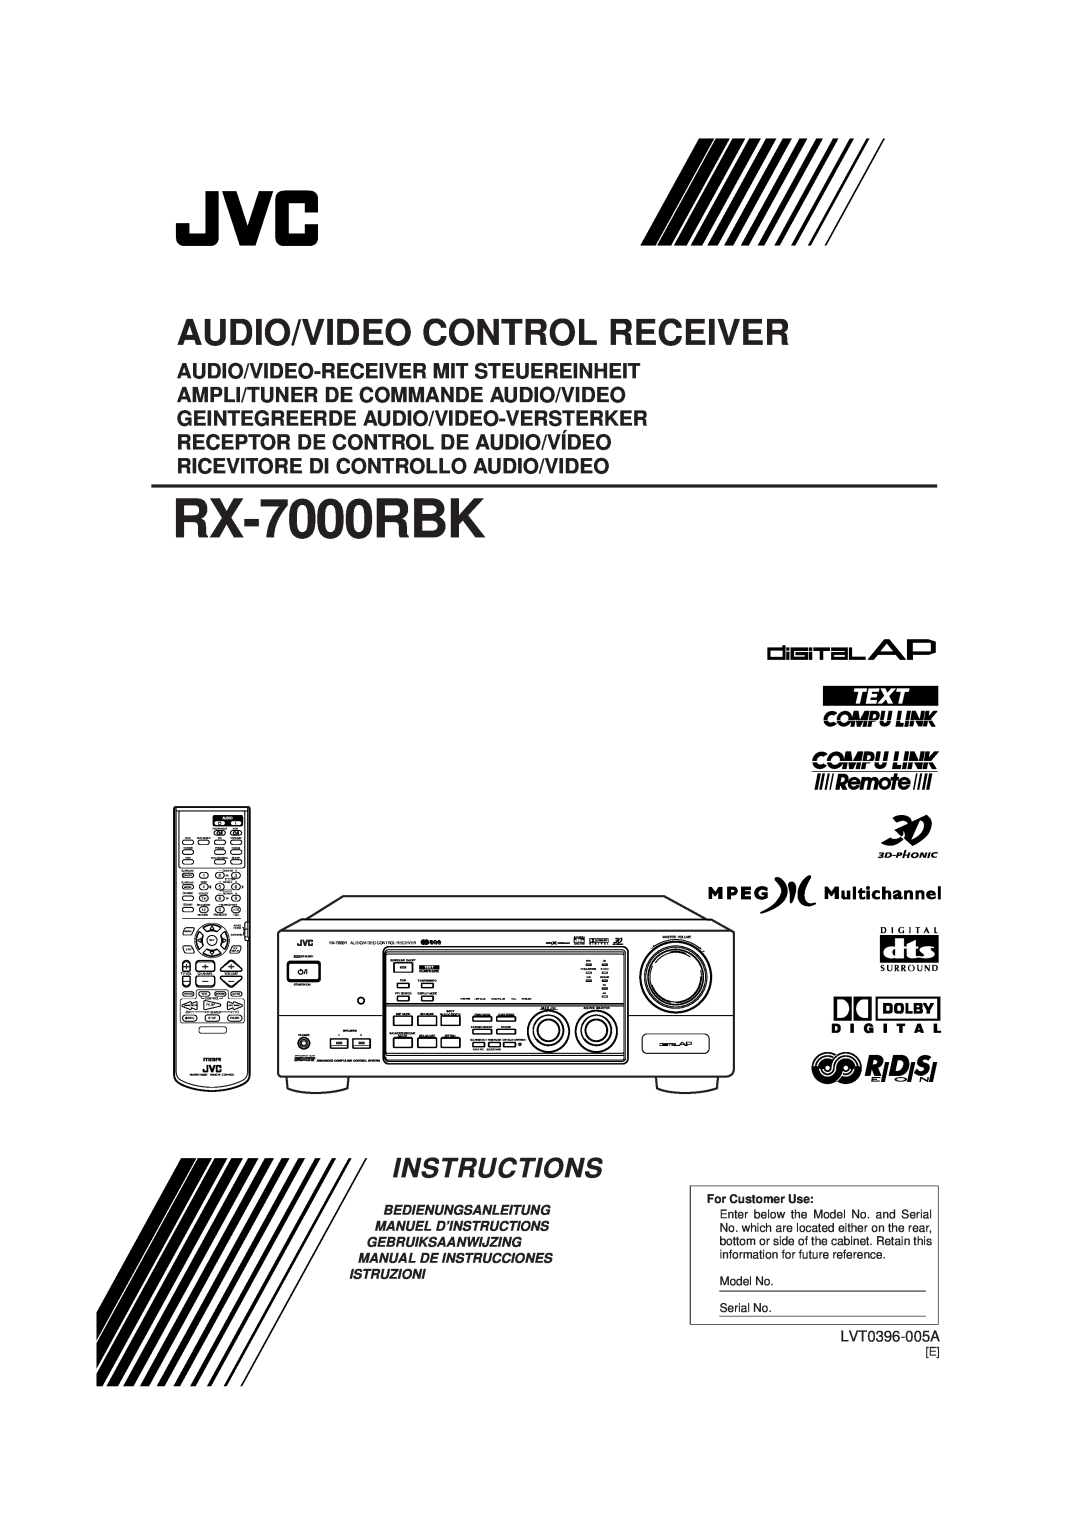 JVC RX-7000RBK manual Audio/Video Control Receiver, Instructions, LVT0396-005A, D I G I T A L, For Customer Use 